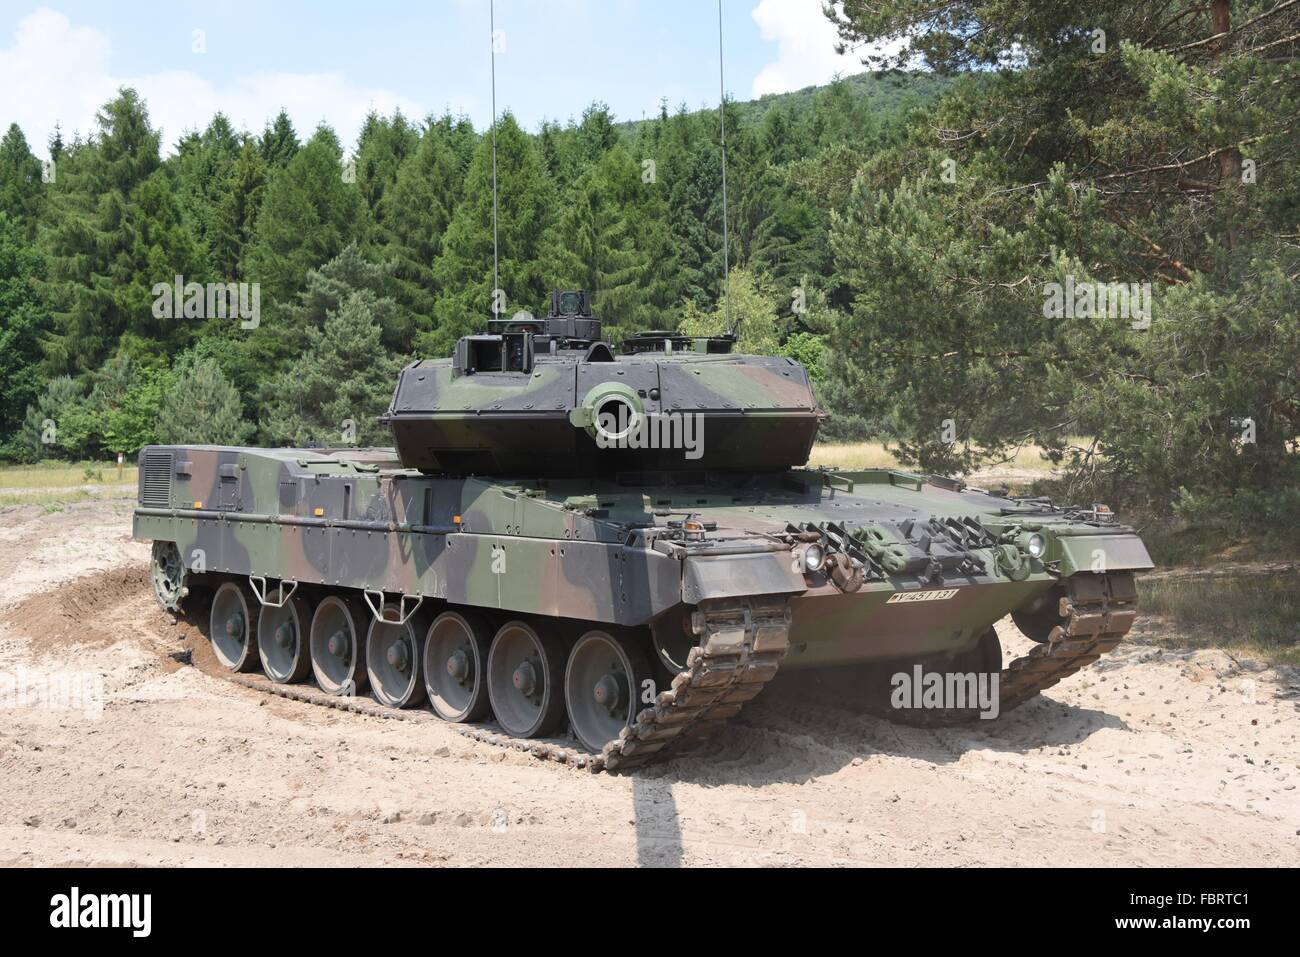 2a7 leopard Leopard 2A7+